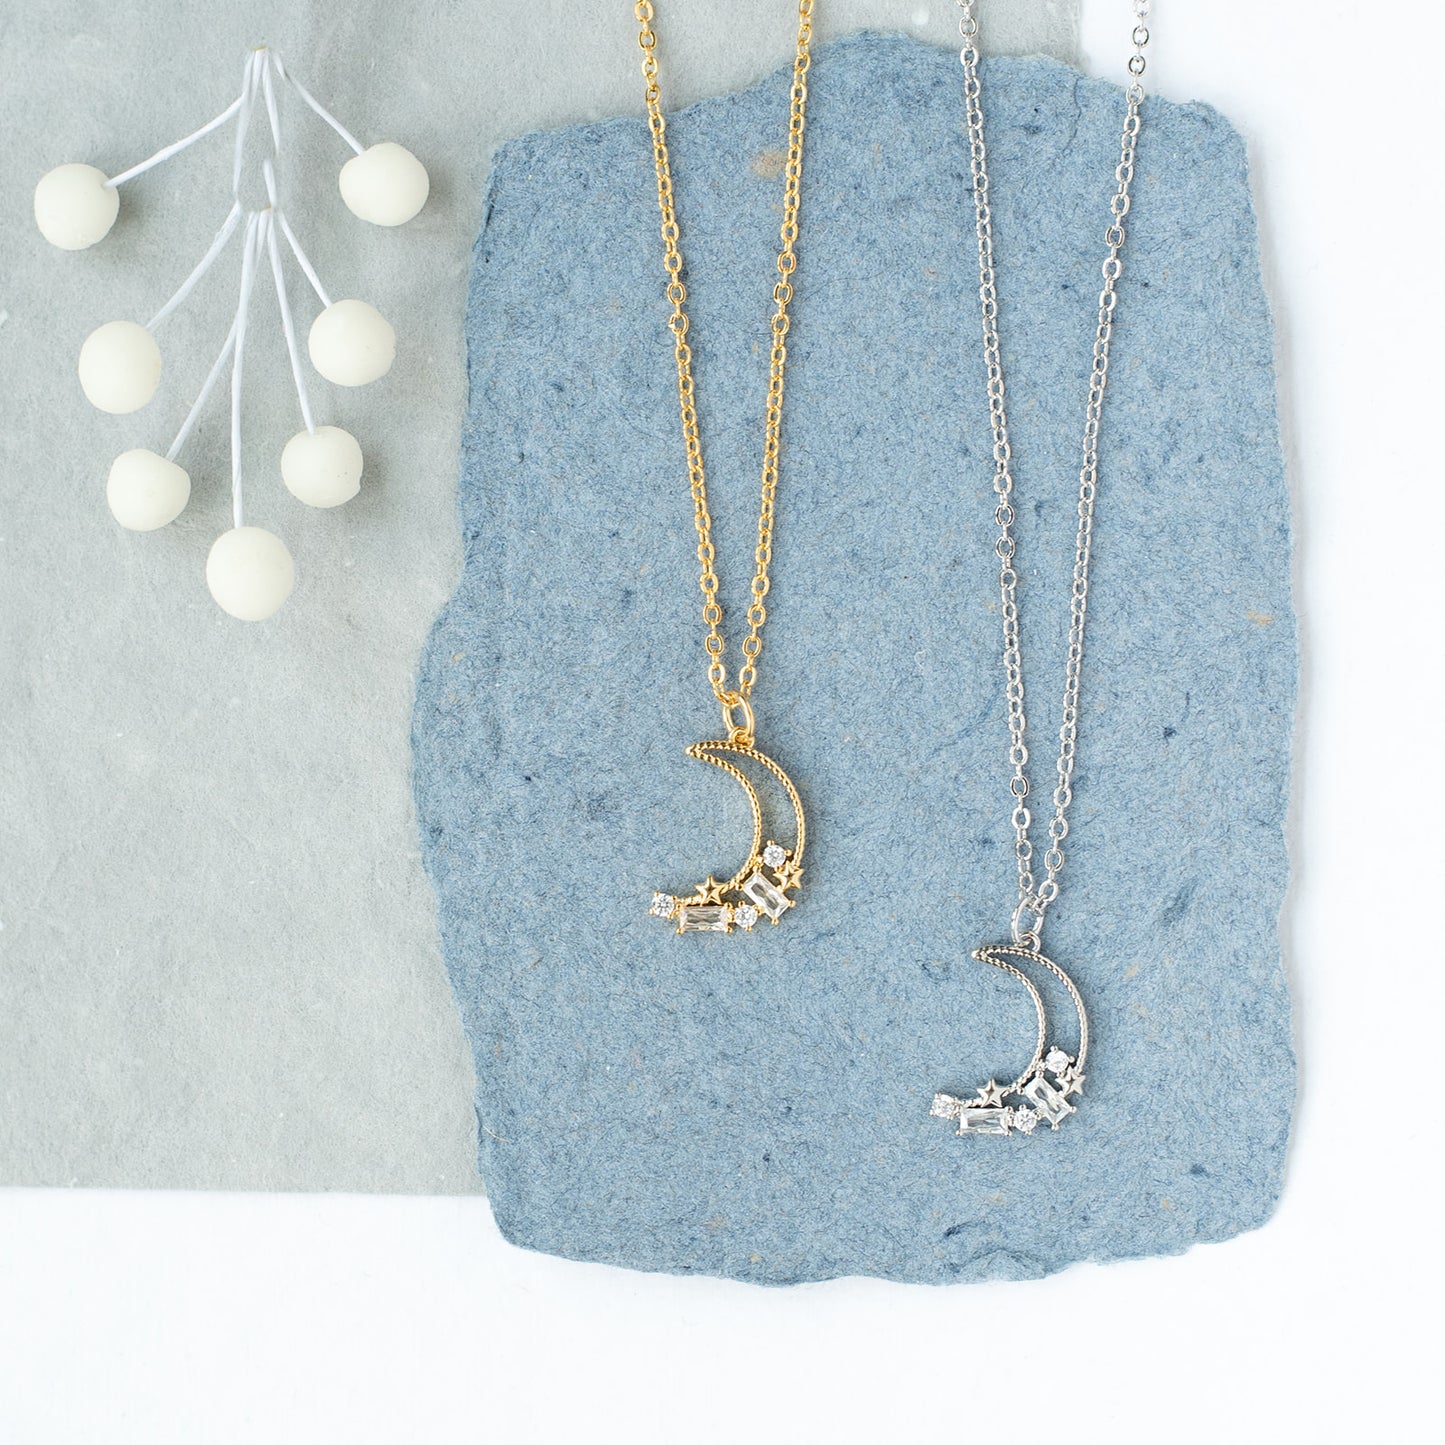 Starry Moon CZ Stones Charm Dainty Pendant Necklace